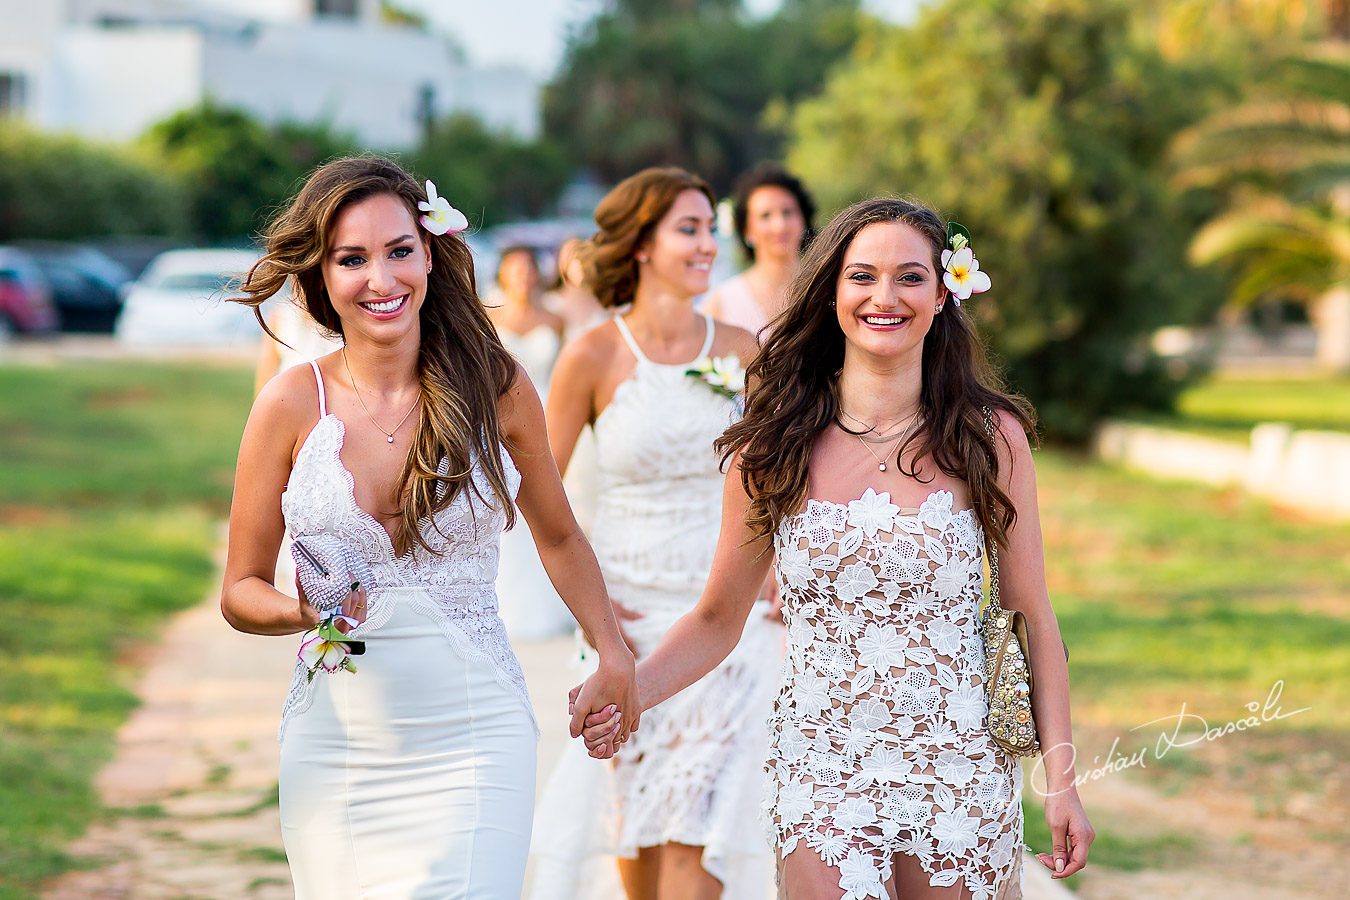 Wedding moments captured at a wedding in Ayia Napa, Cyprus by Cristian Dascalu.